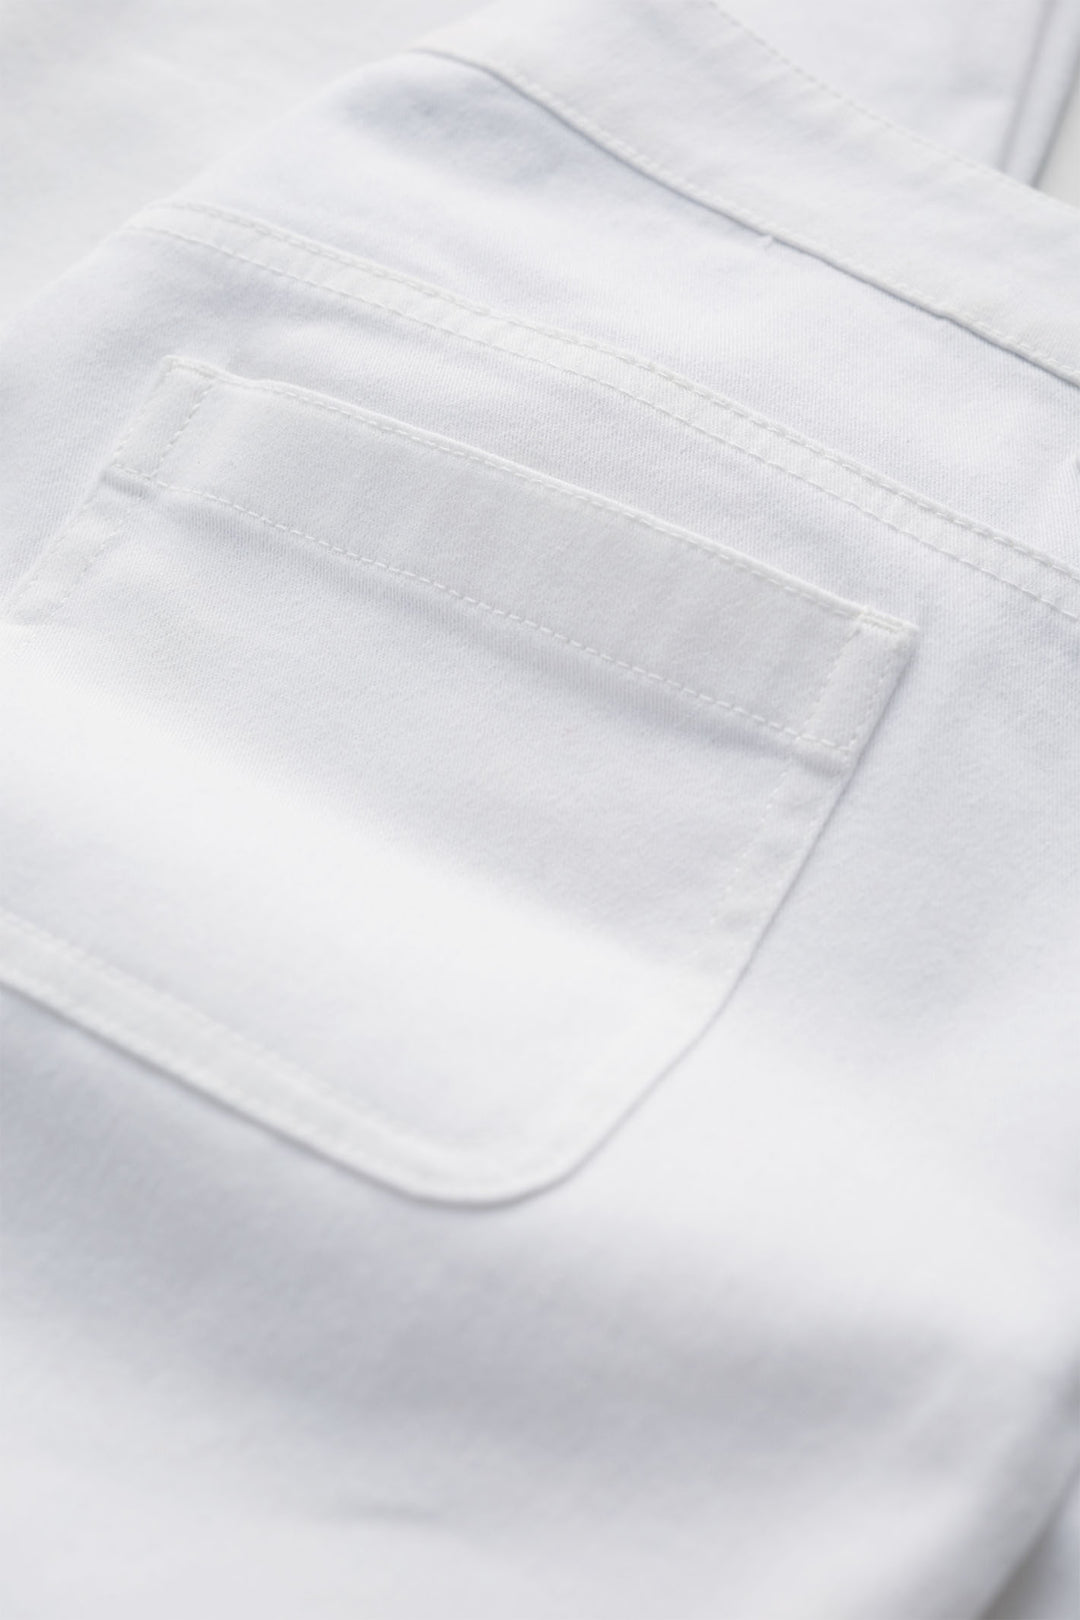 Seasalt Albert Quay Salt White Cropped Trousers - Shirley Allum Boutique